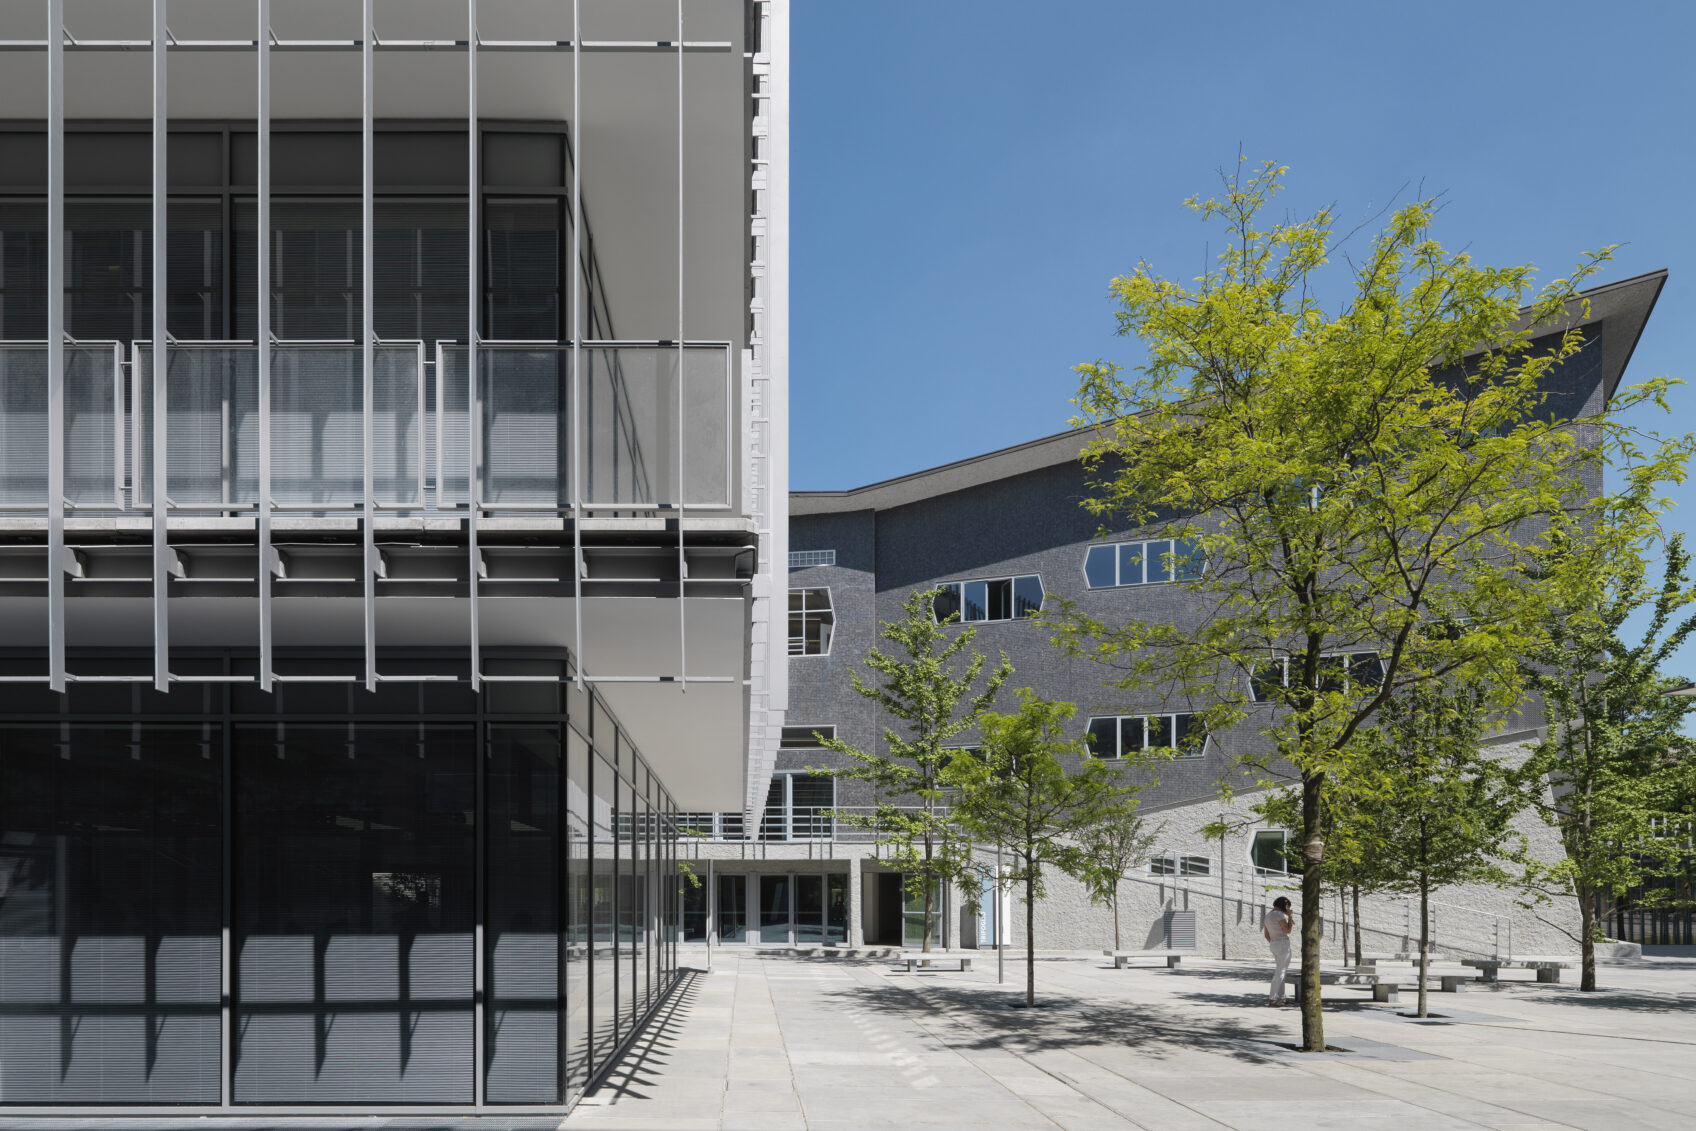 Detail facade and green areas new Campus Leonardo faculty of Architecture Politecnico di Milano